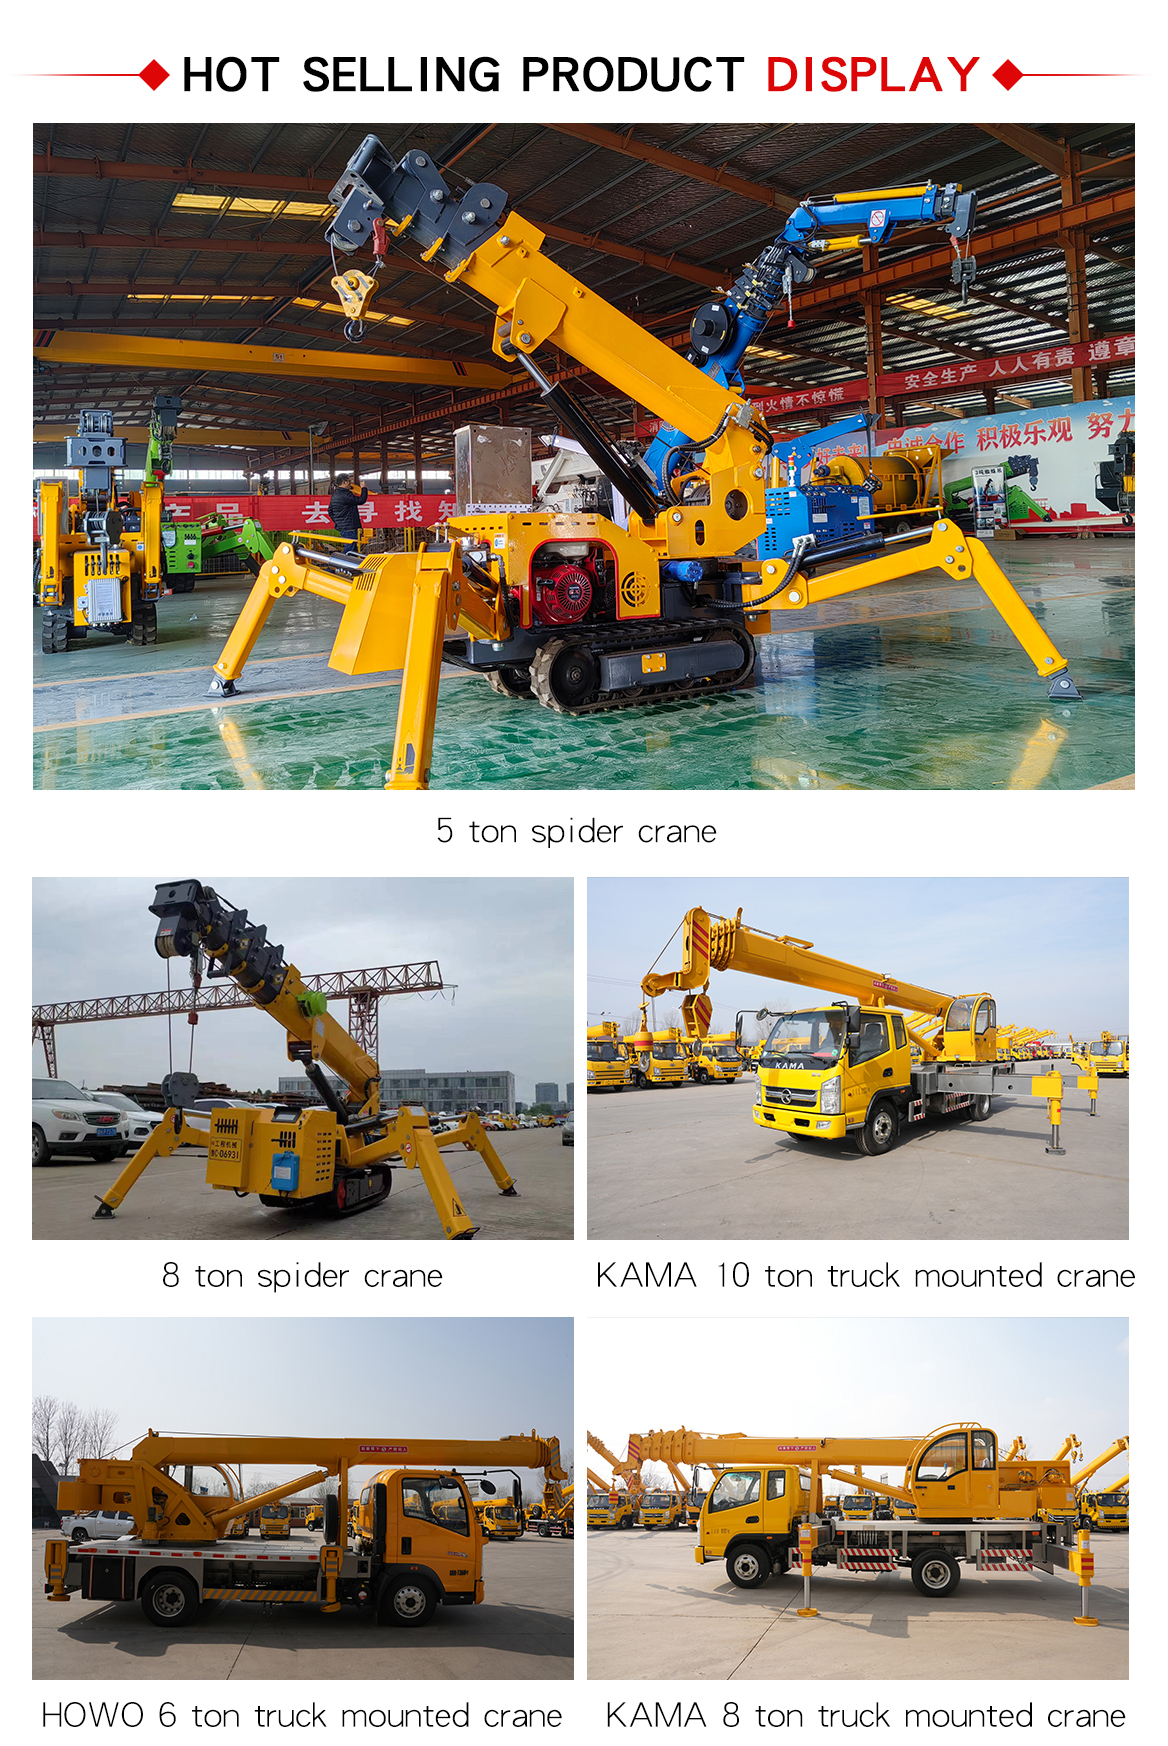 8 tons spider crane